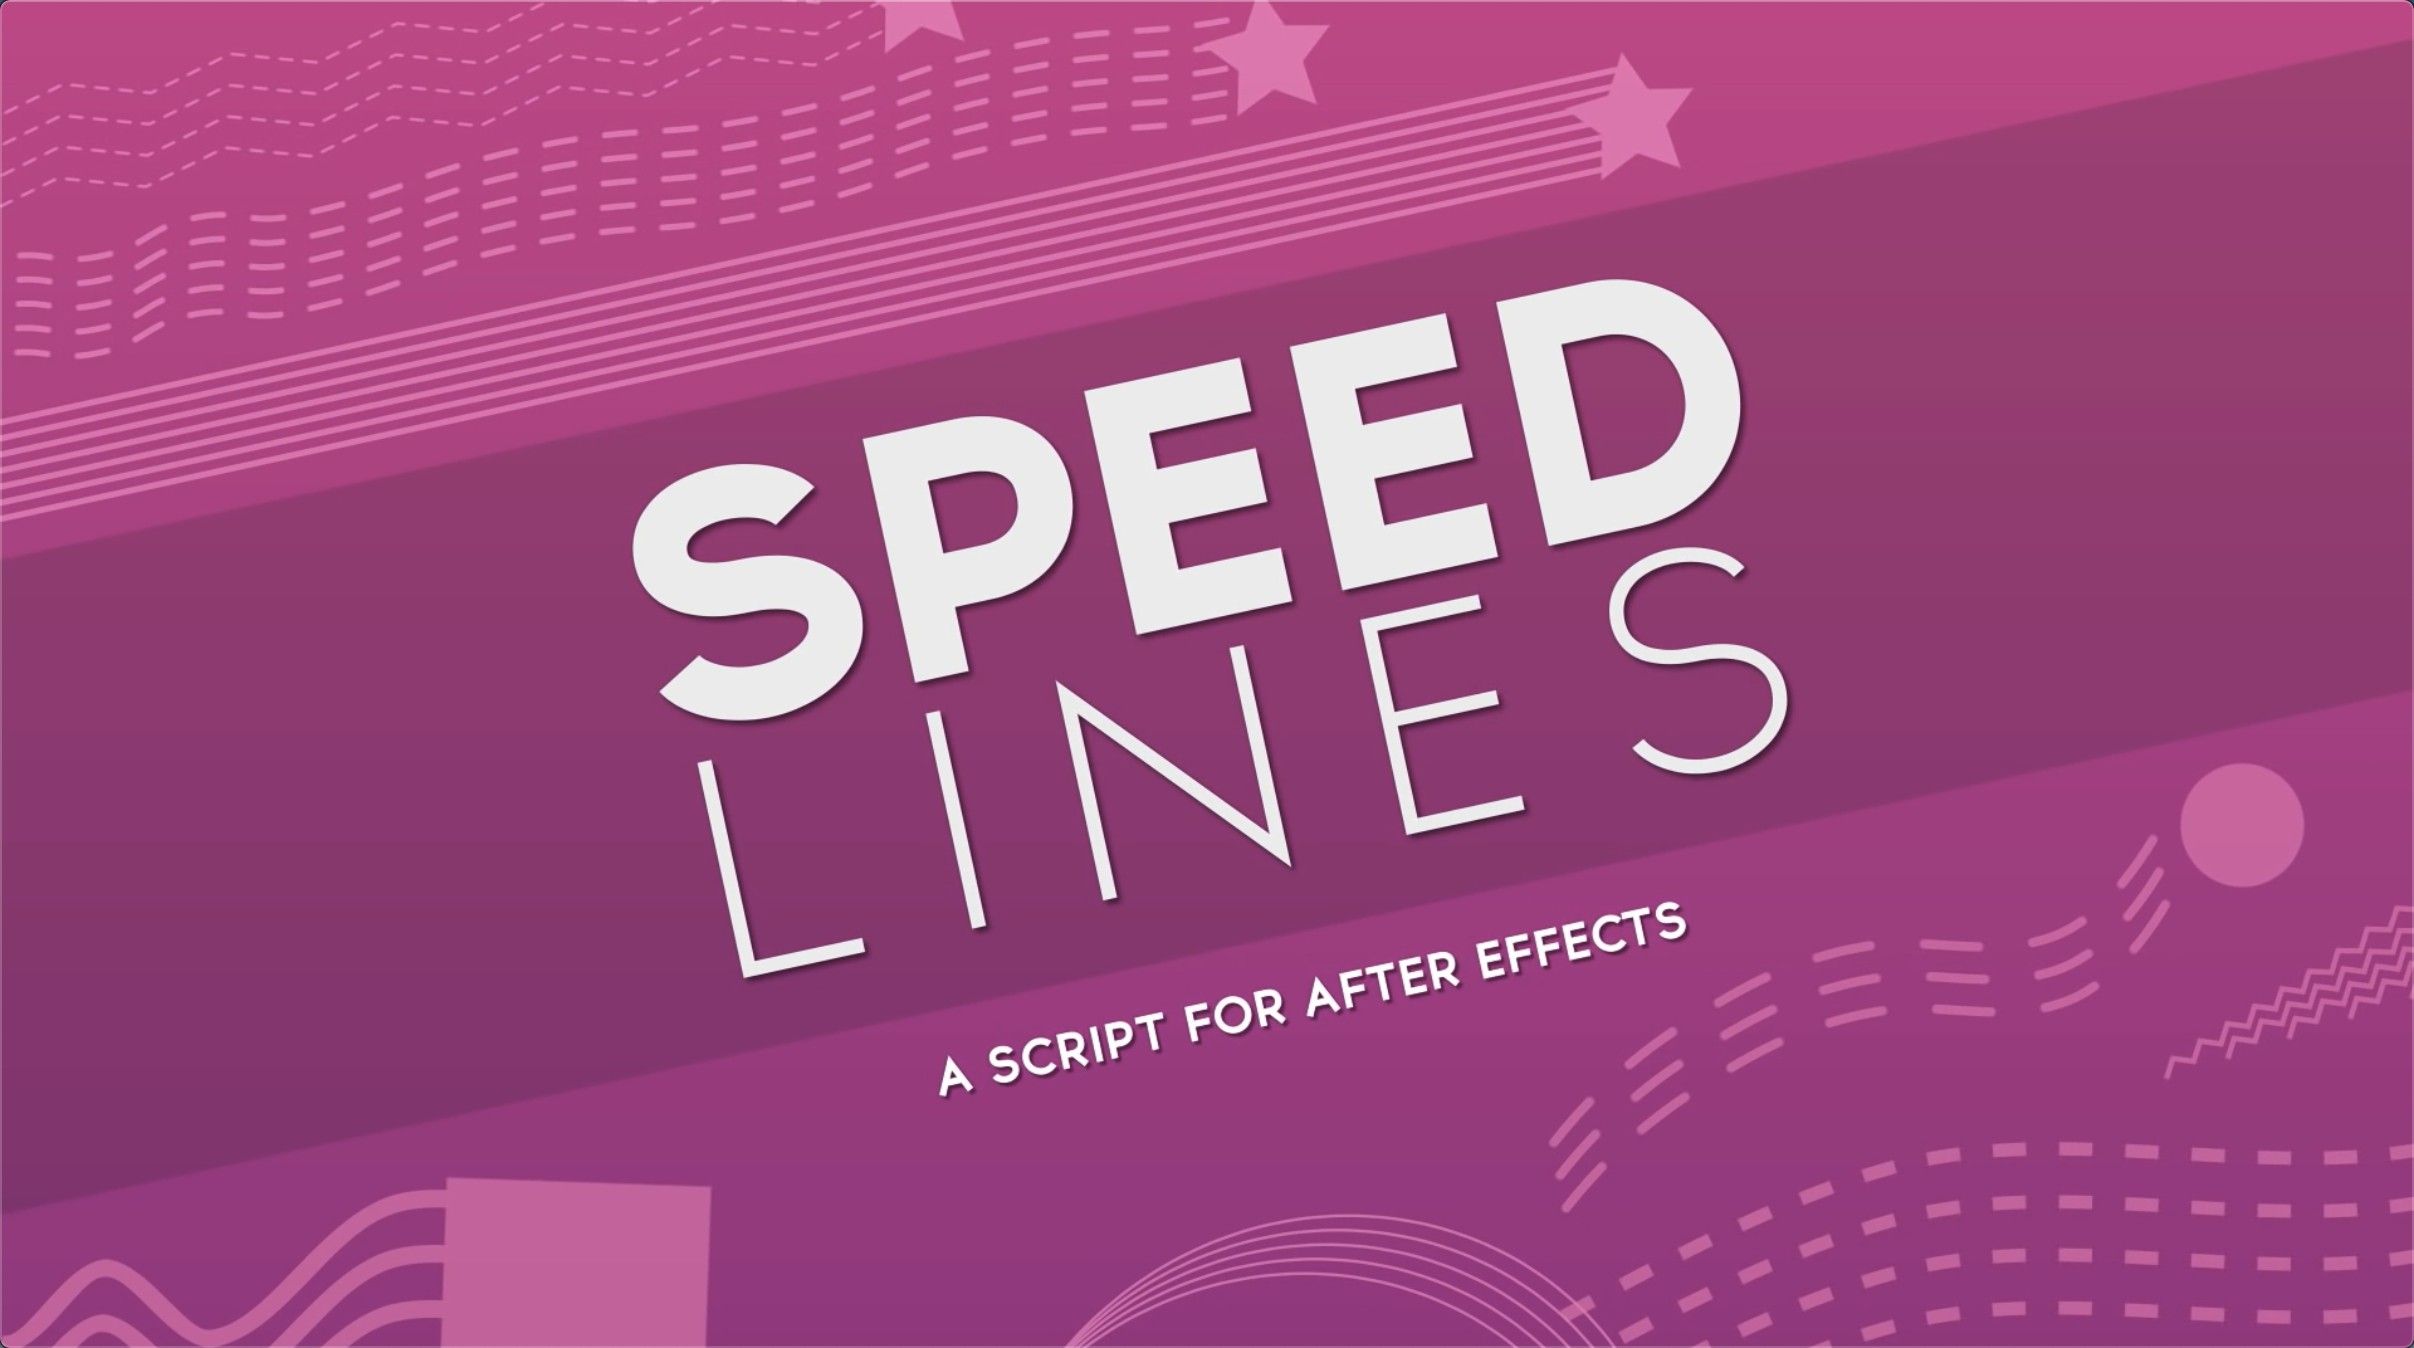 Effect speed. Скрипты after Effects. Script after Effects. After Effects линии. Эффект полосок в Афтер эффект.